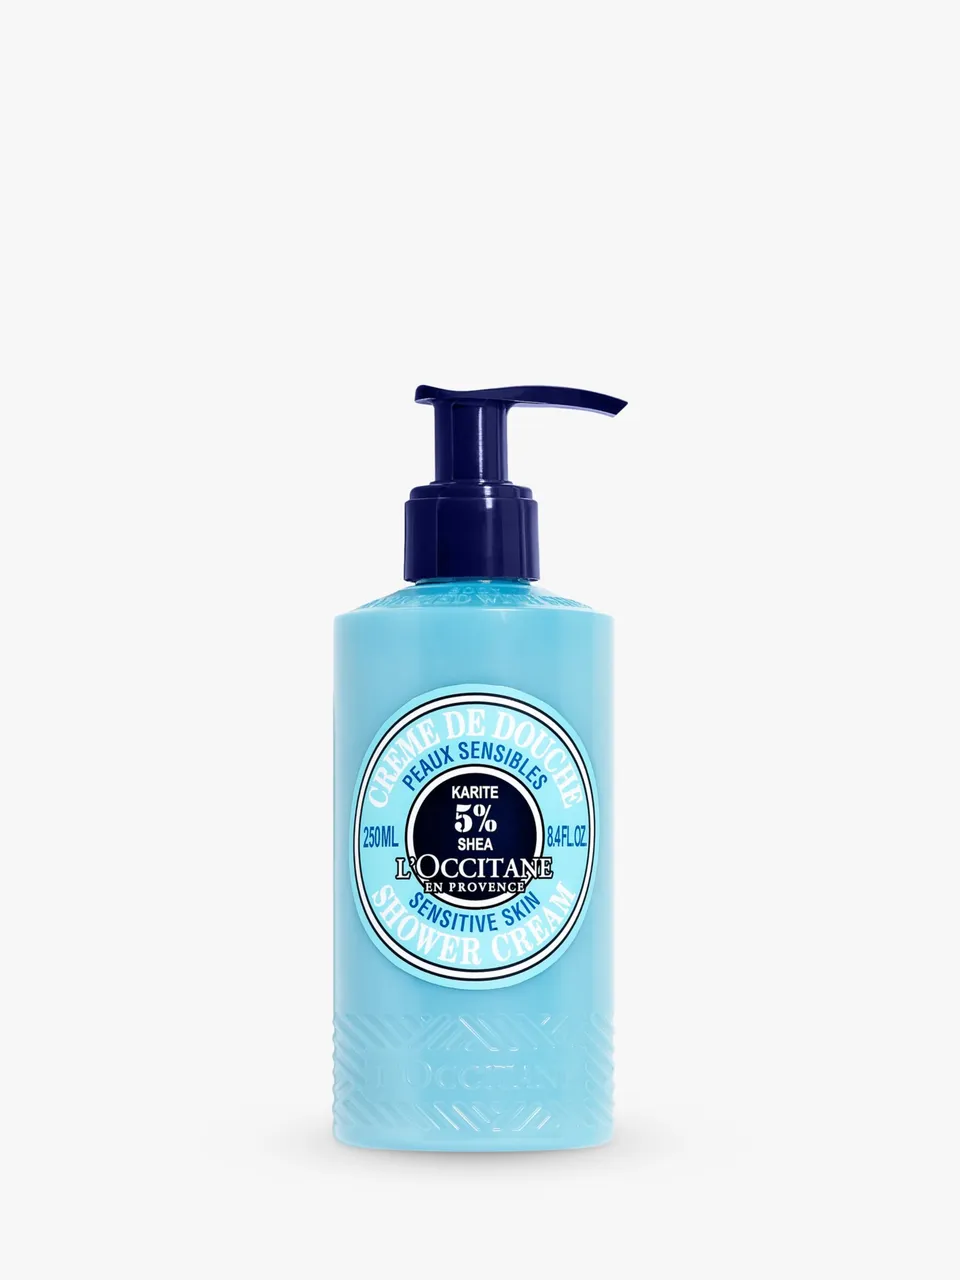 L'OCCITANE Shea Sensitive Skin Shower Cream, 250ml - Unisex - Size: 250ml